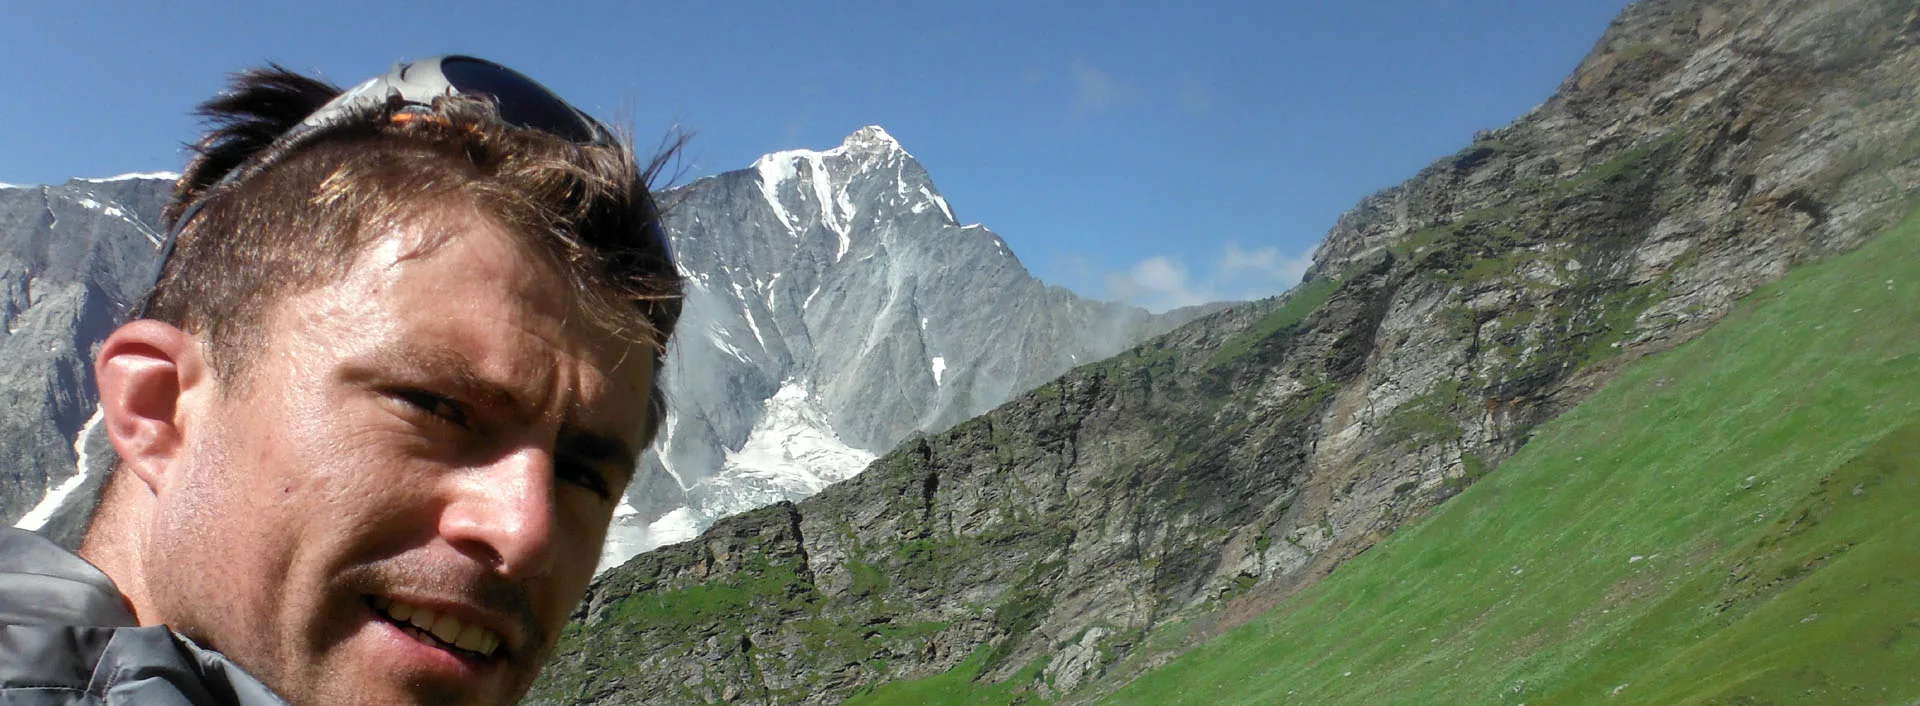 Hanuman Tibba Peak in the background, with a customer selfie